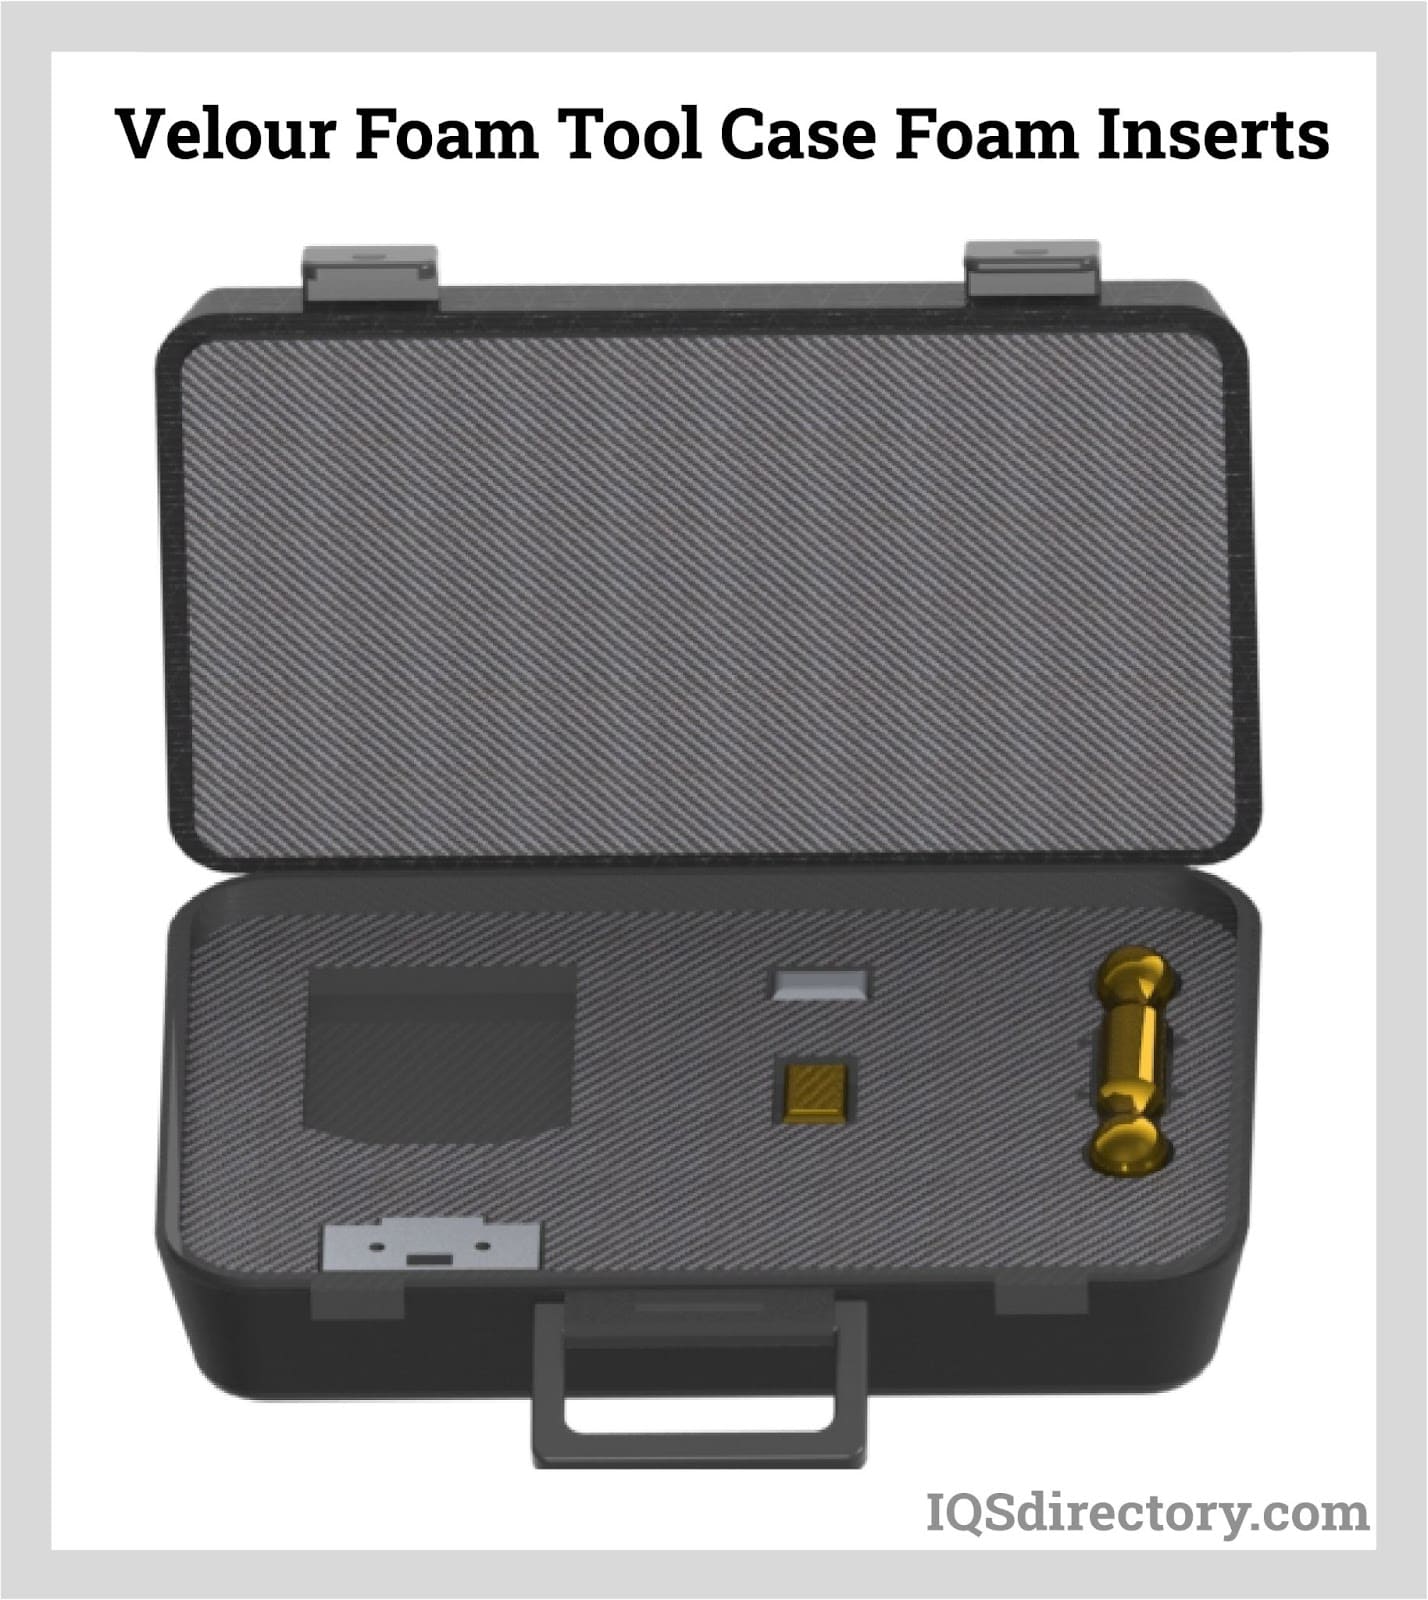 Velour Foam Tool Case Foam Inserts